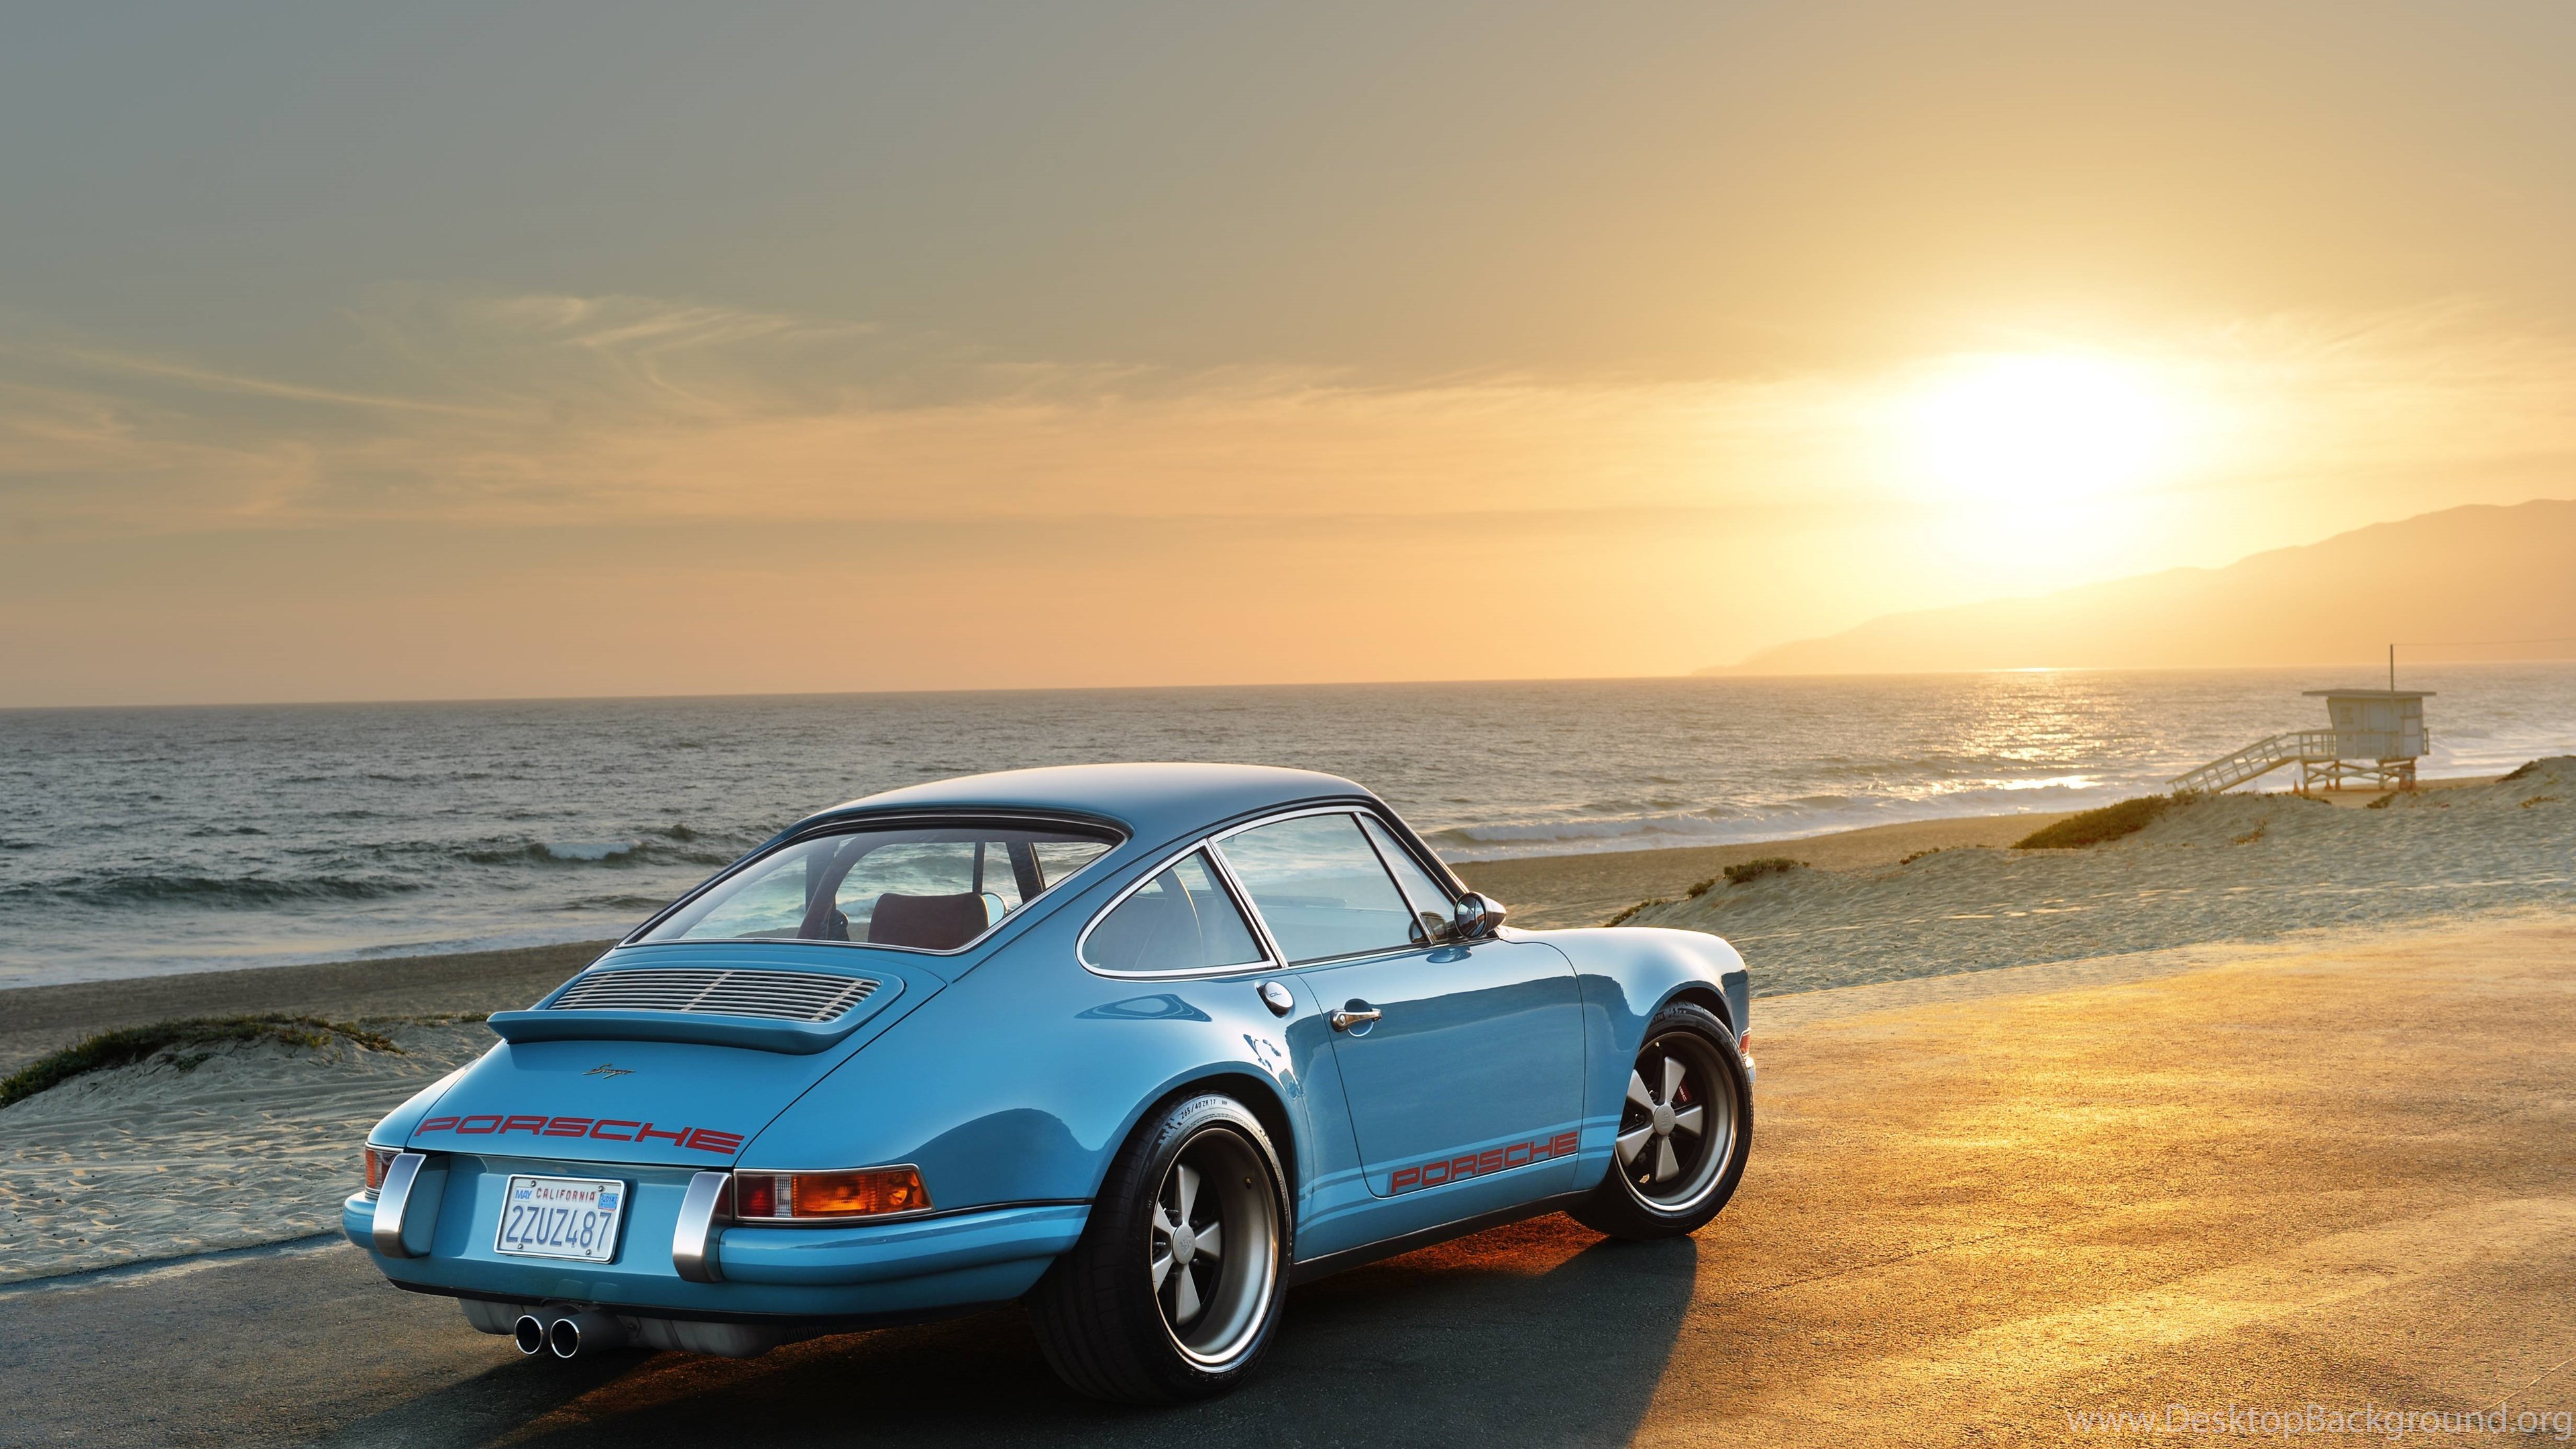 Singer Porsche 911, Pics Desktop Background